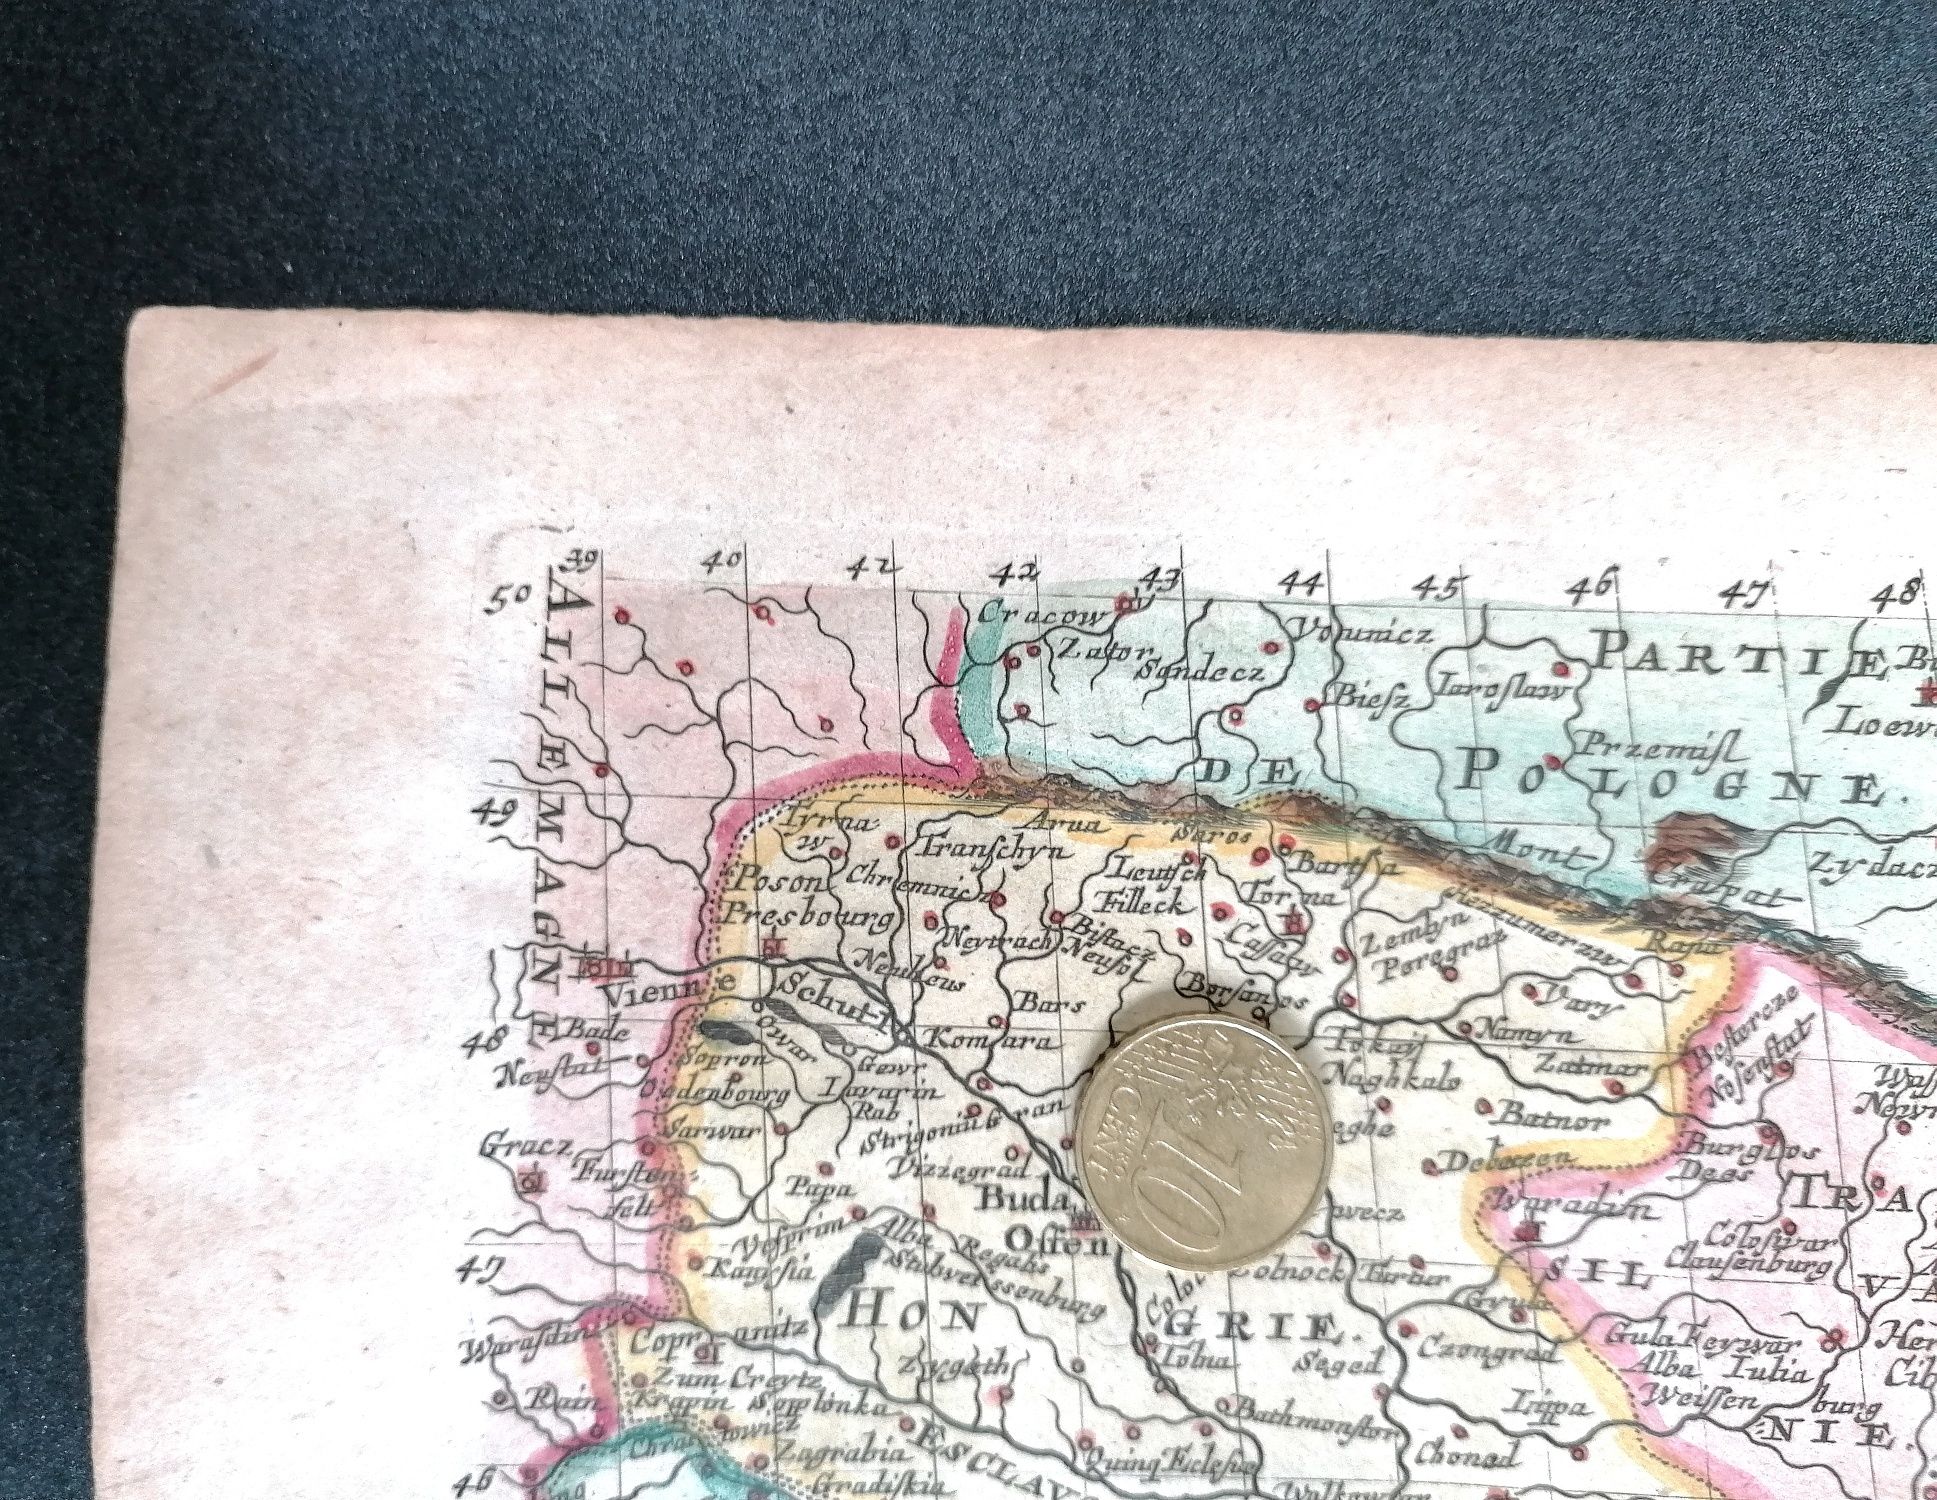 Hartă 1638, Principate, Transilvania, cartograf francez celebru